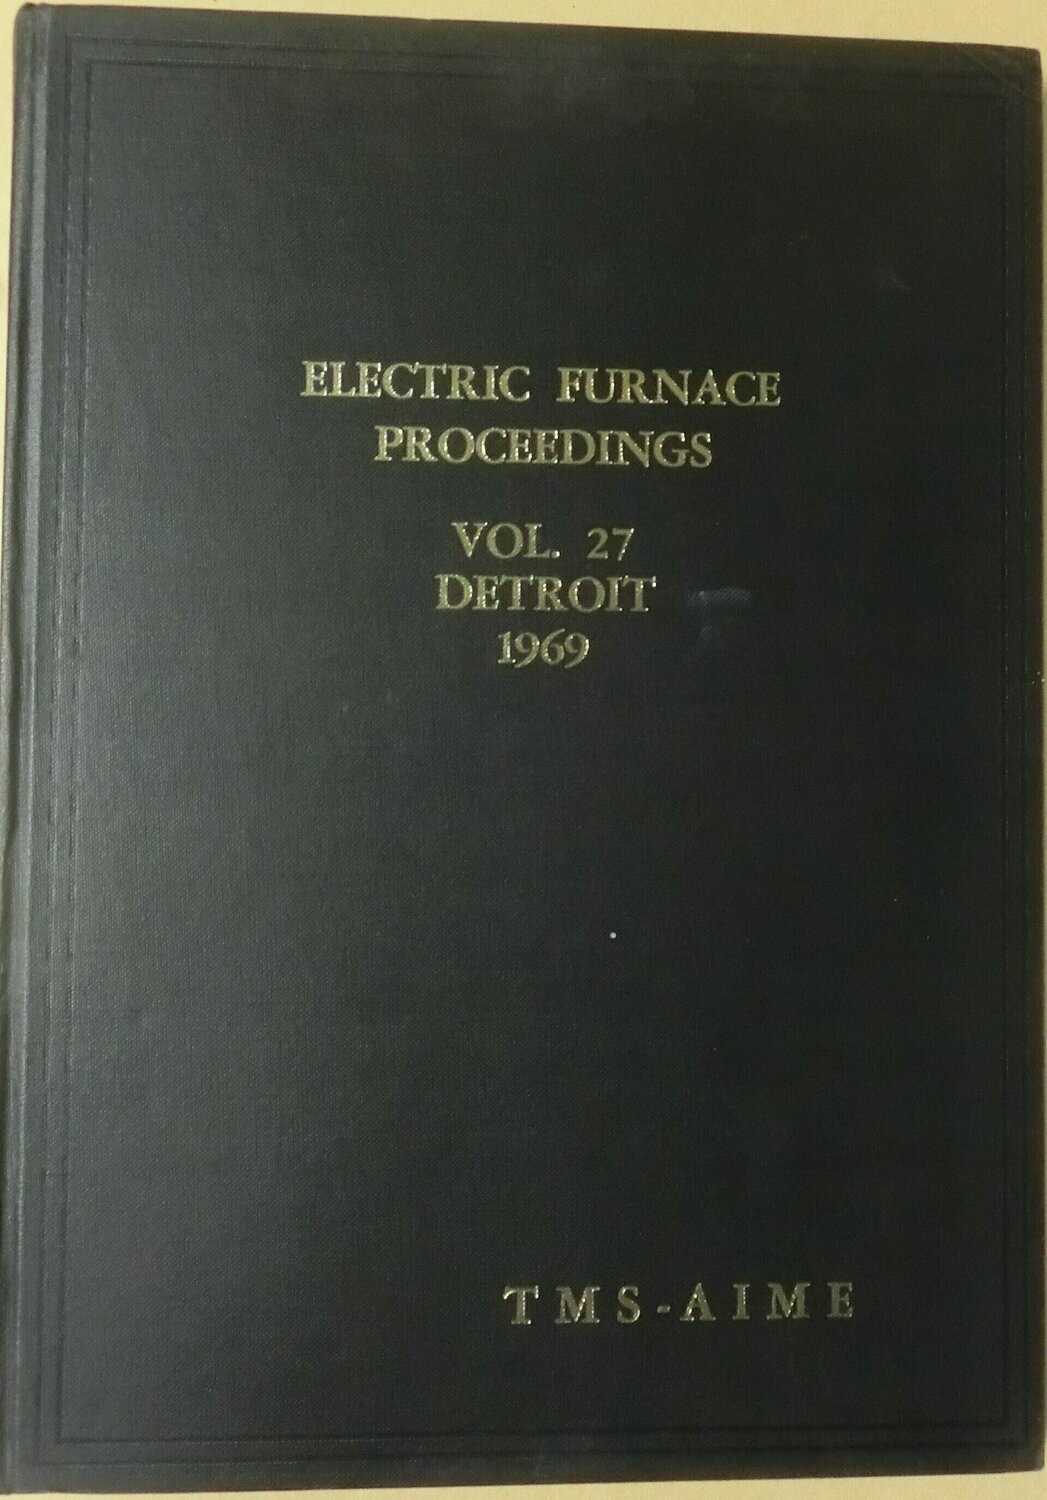 Electric furnace proceedings vol 27 Detroit 1969